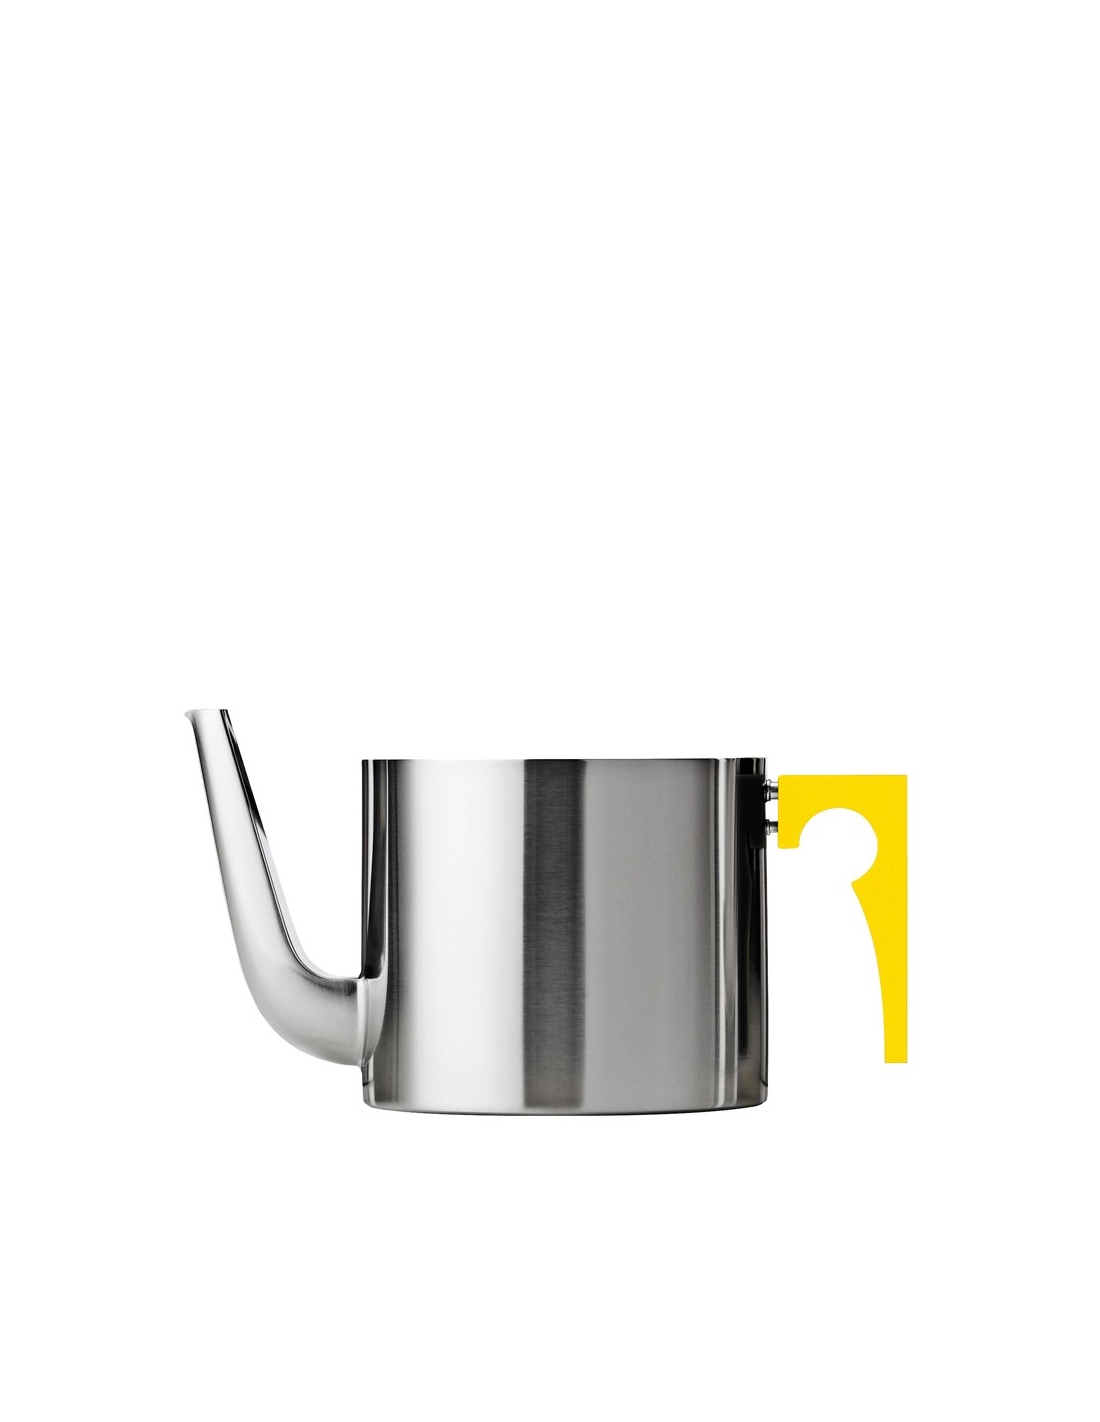 Paul Smih Addcolour Yellow Tea Pot